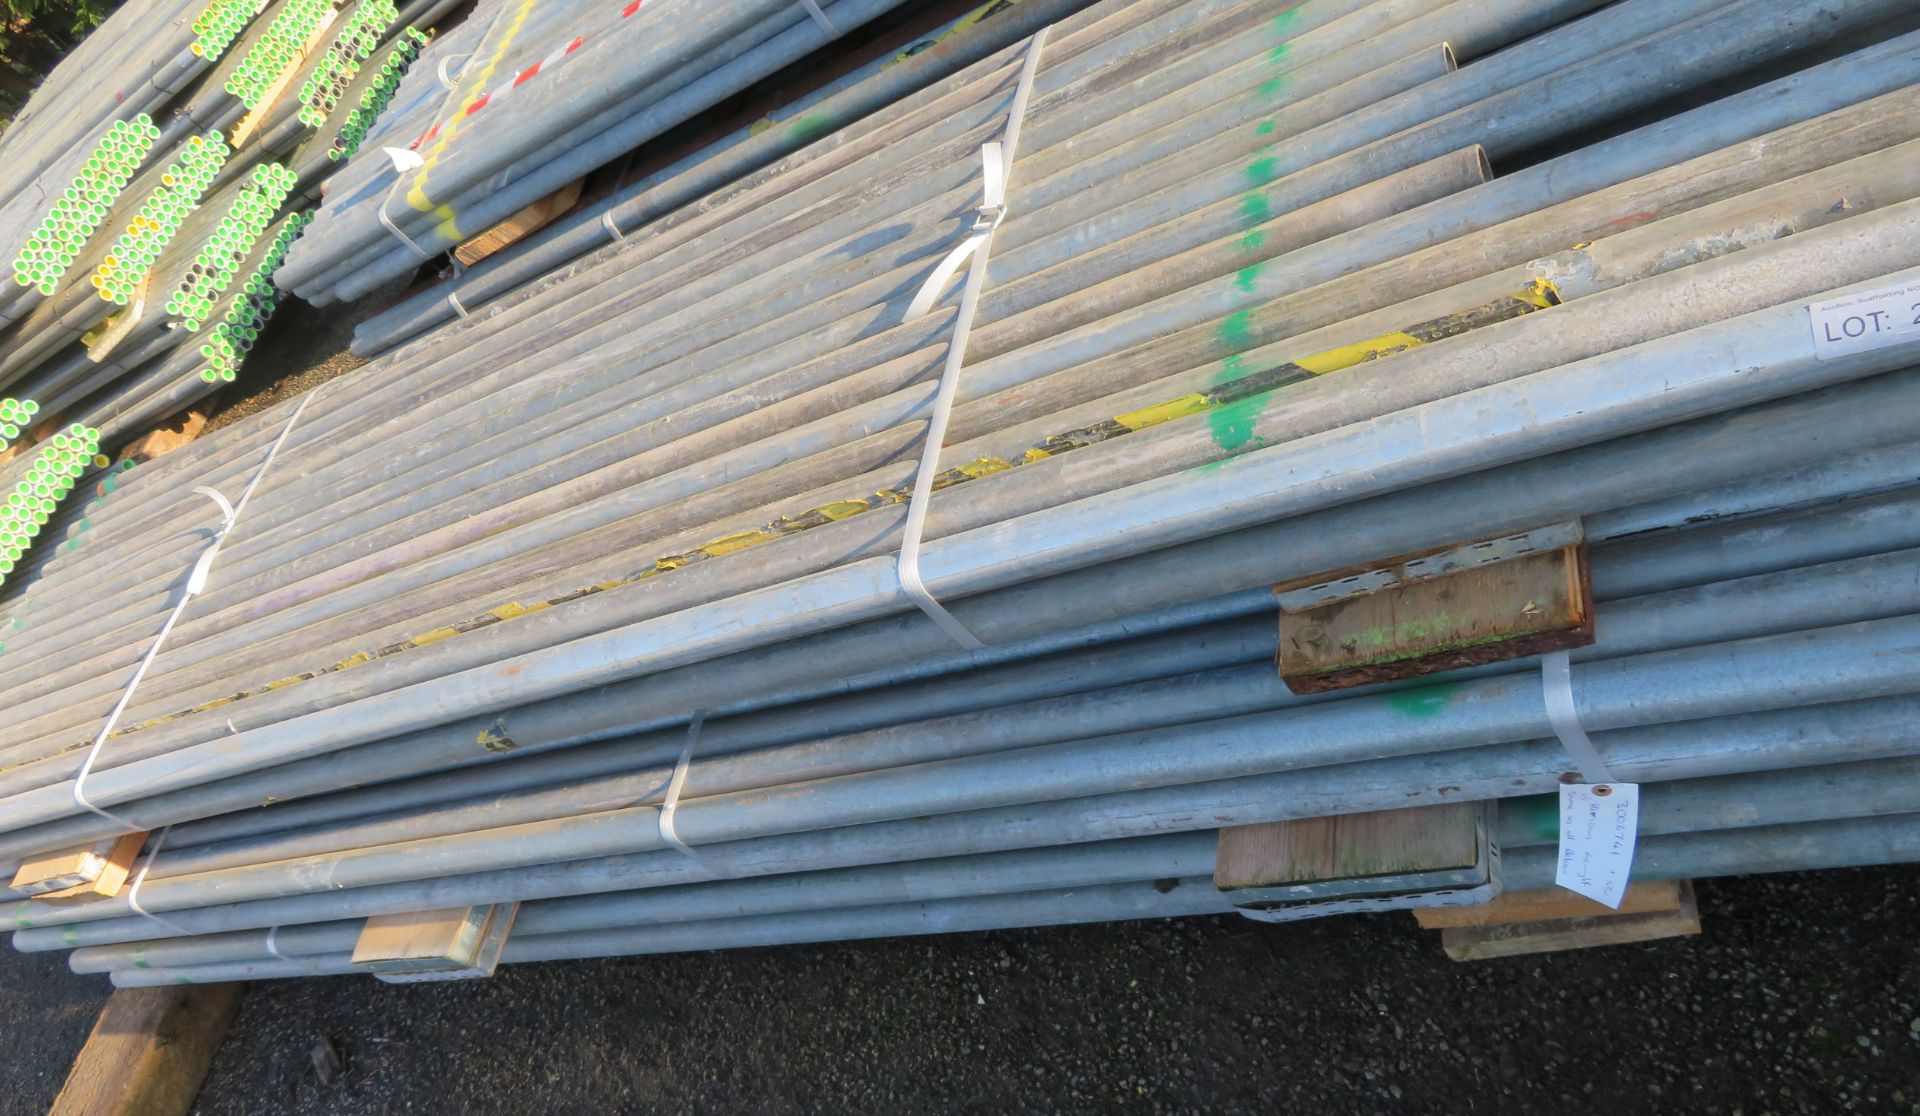 150x Various Length Galvanised Steel Scaffolding Poles. Lengths Range Between 11.5ft - 8ft. - Image 5 of 5